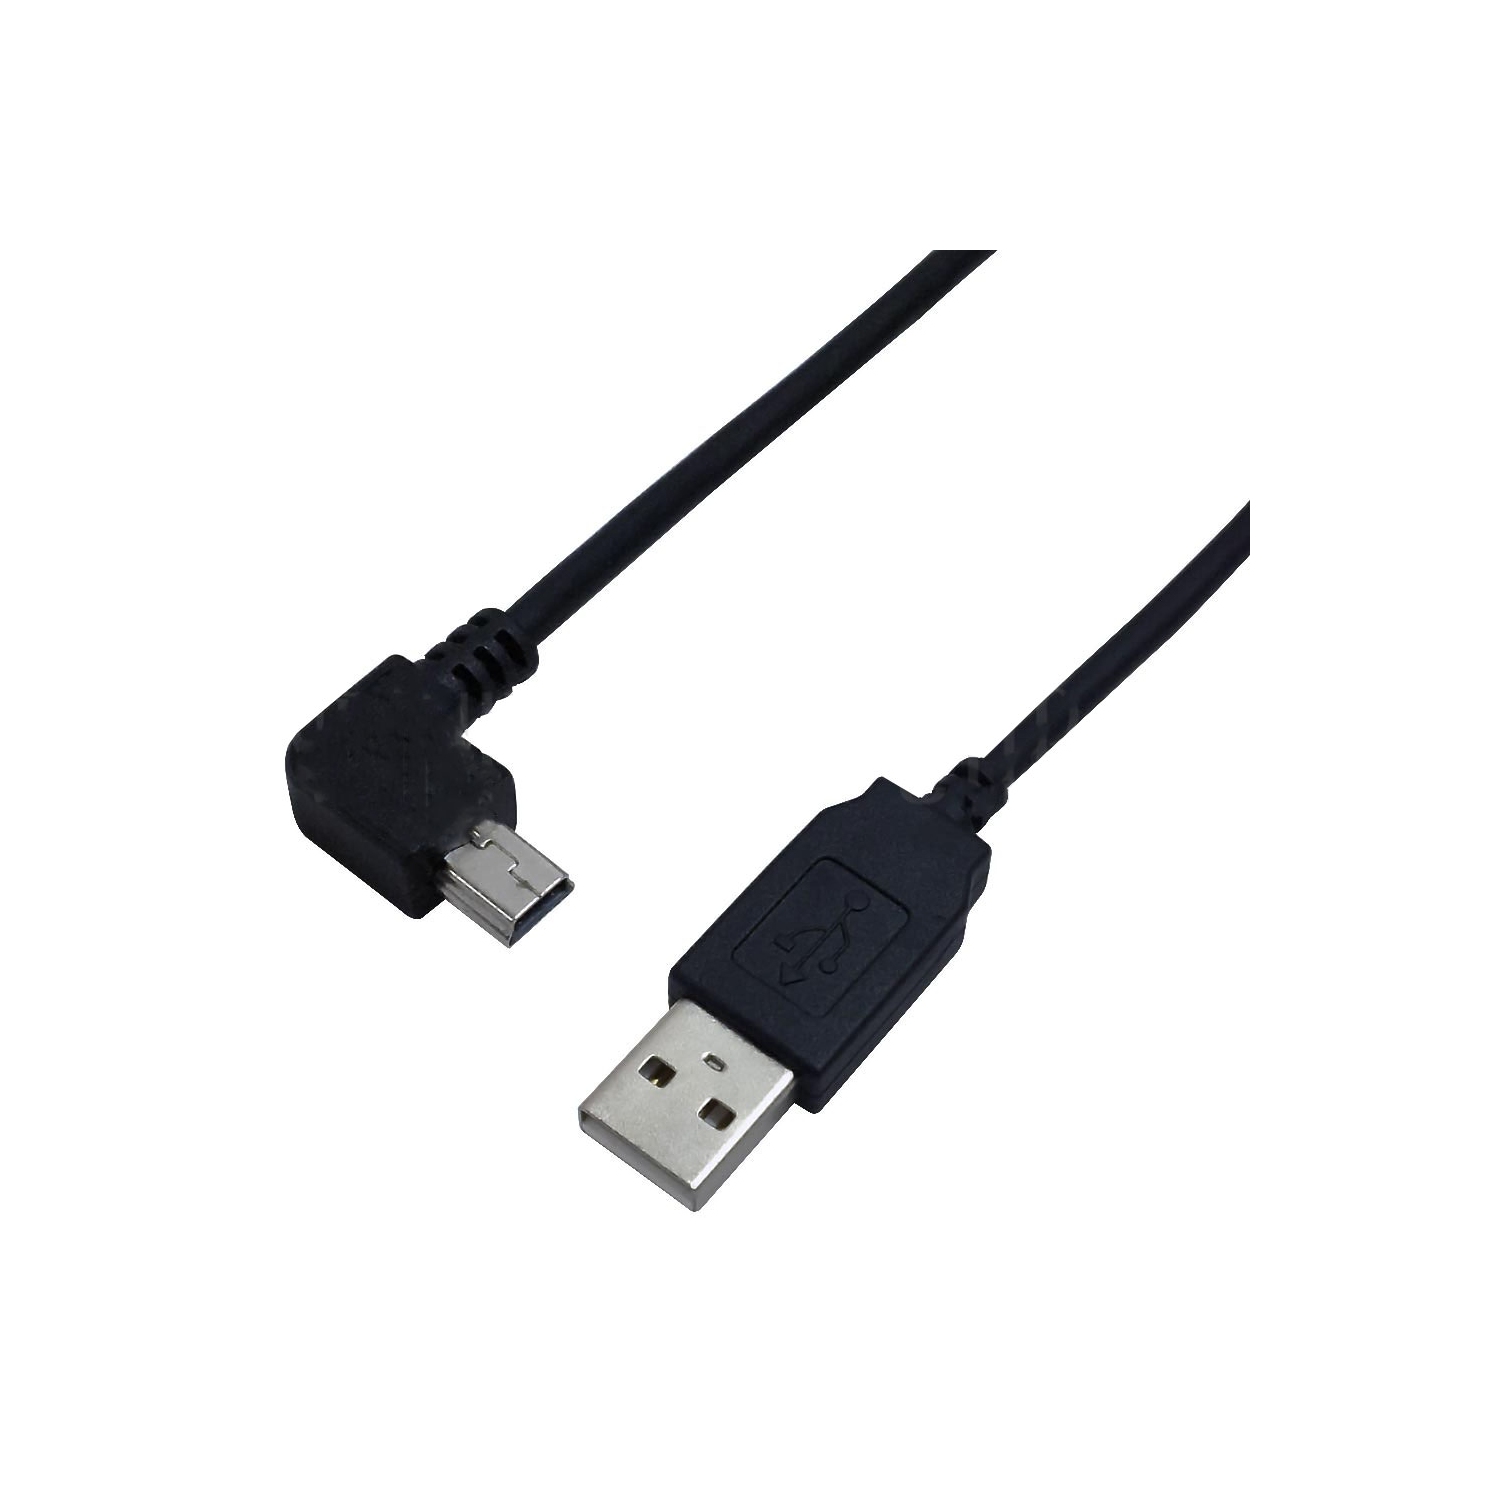 Free Shipping! HYFAI USB 2.0 A Straight Male to Mini-B 5-Pin Mini USB Right Angle Male Cable, 6 ft